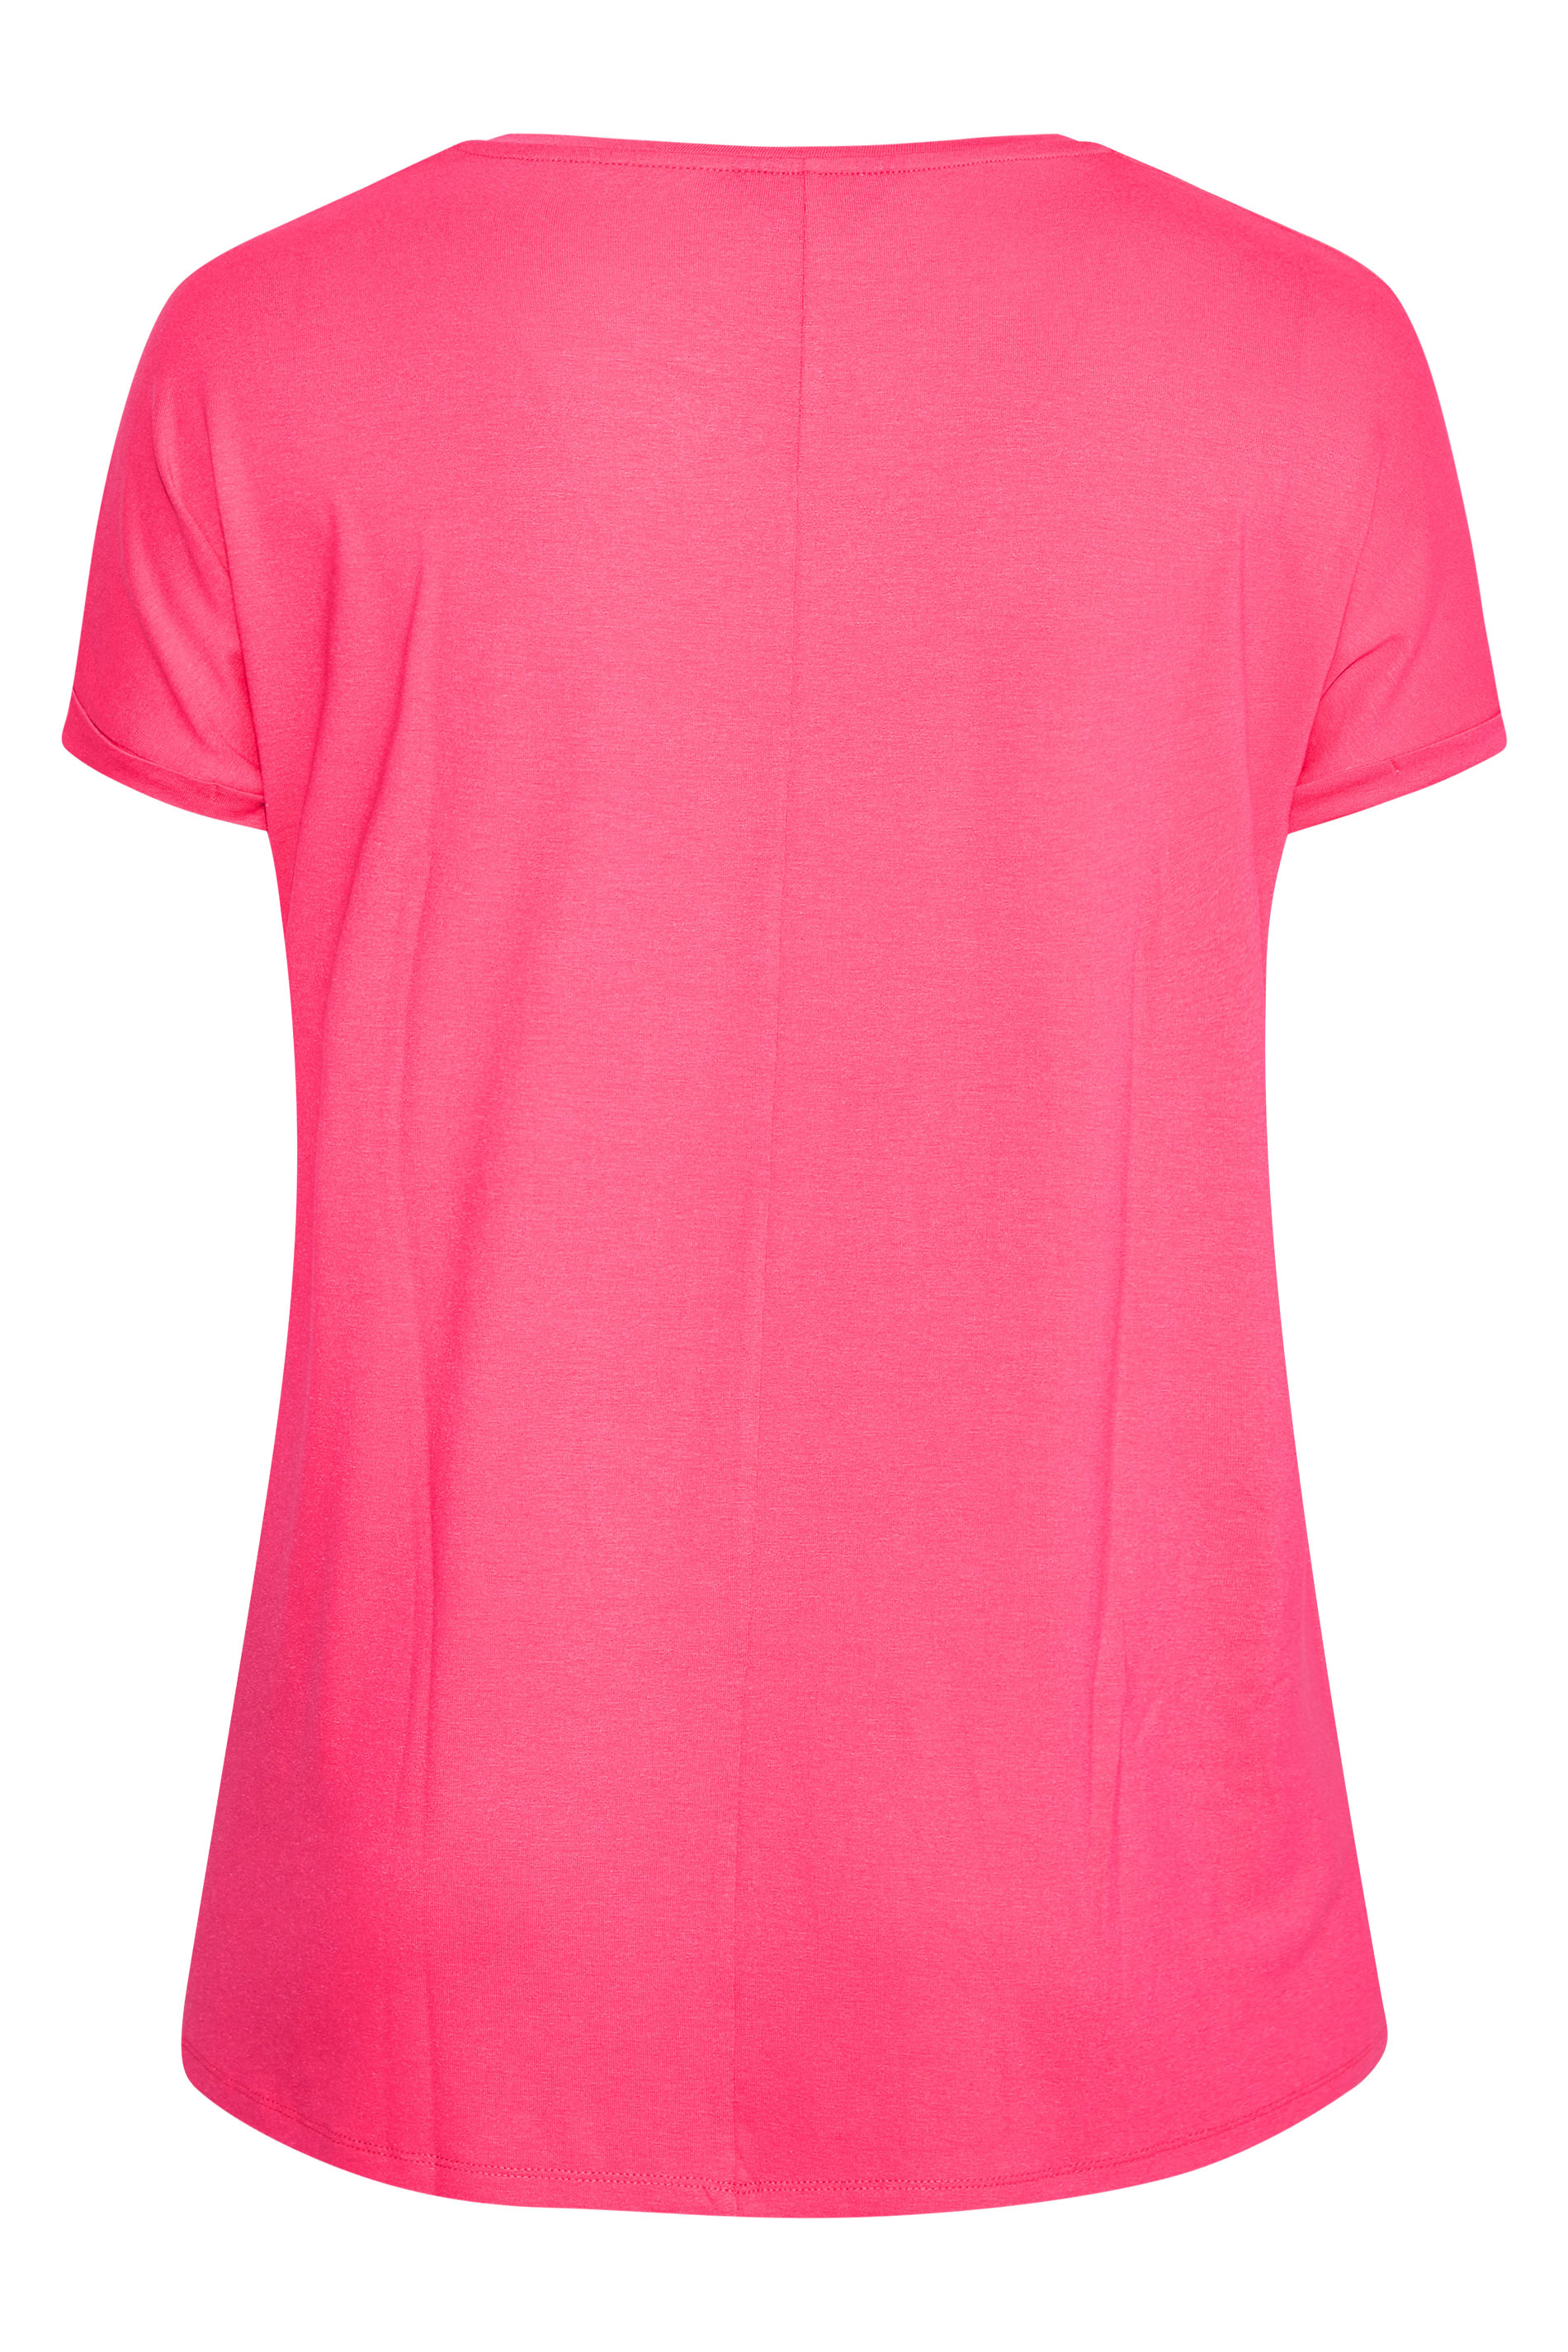 Grande taille  Tops Grande taille  Tops Jersey | T-Shirt Rose Empiècement Floral Sequins - JJ32421